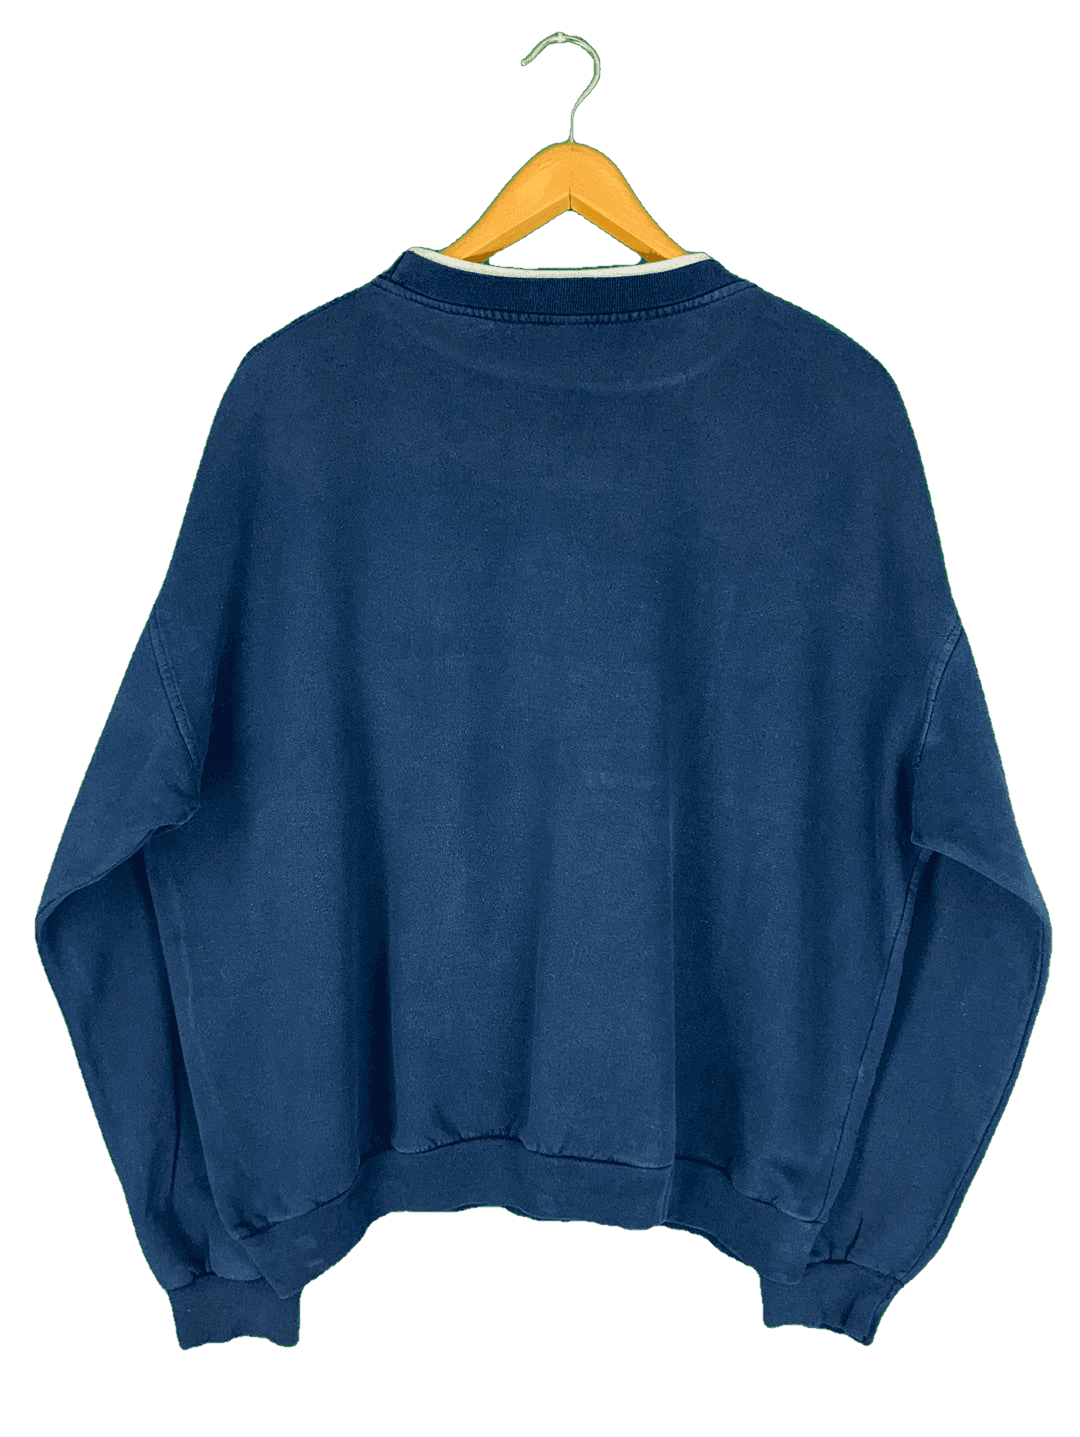 Diesel Sweater (M)